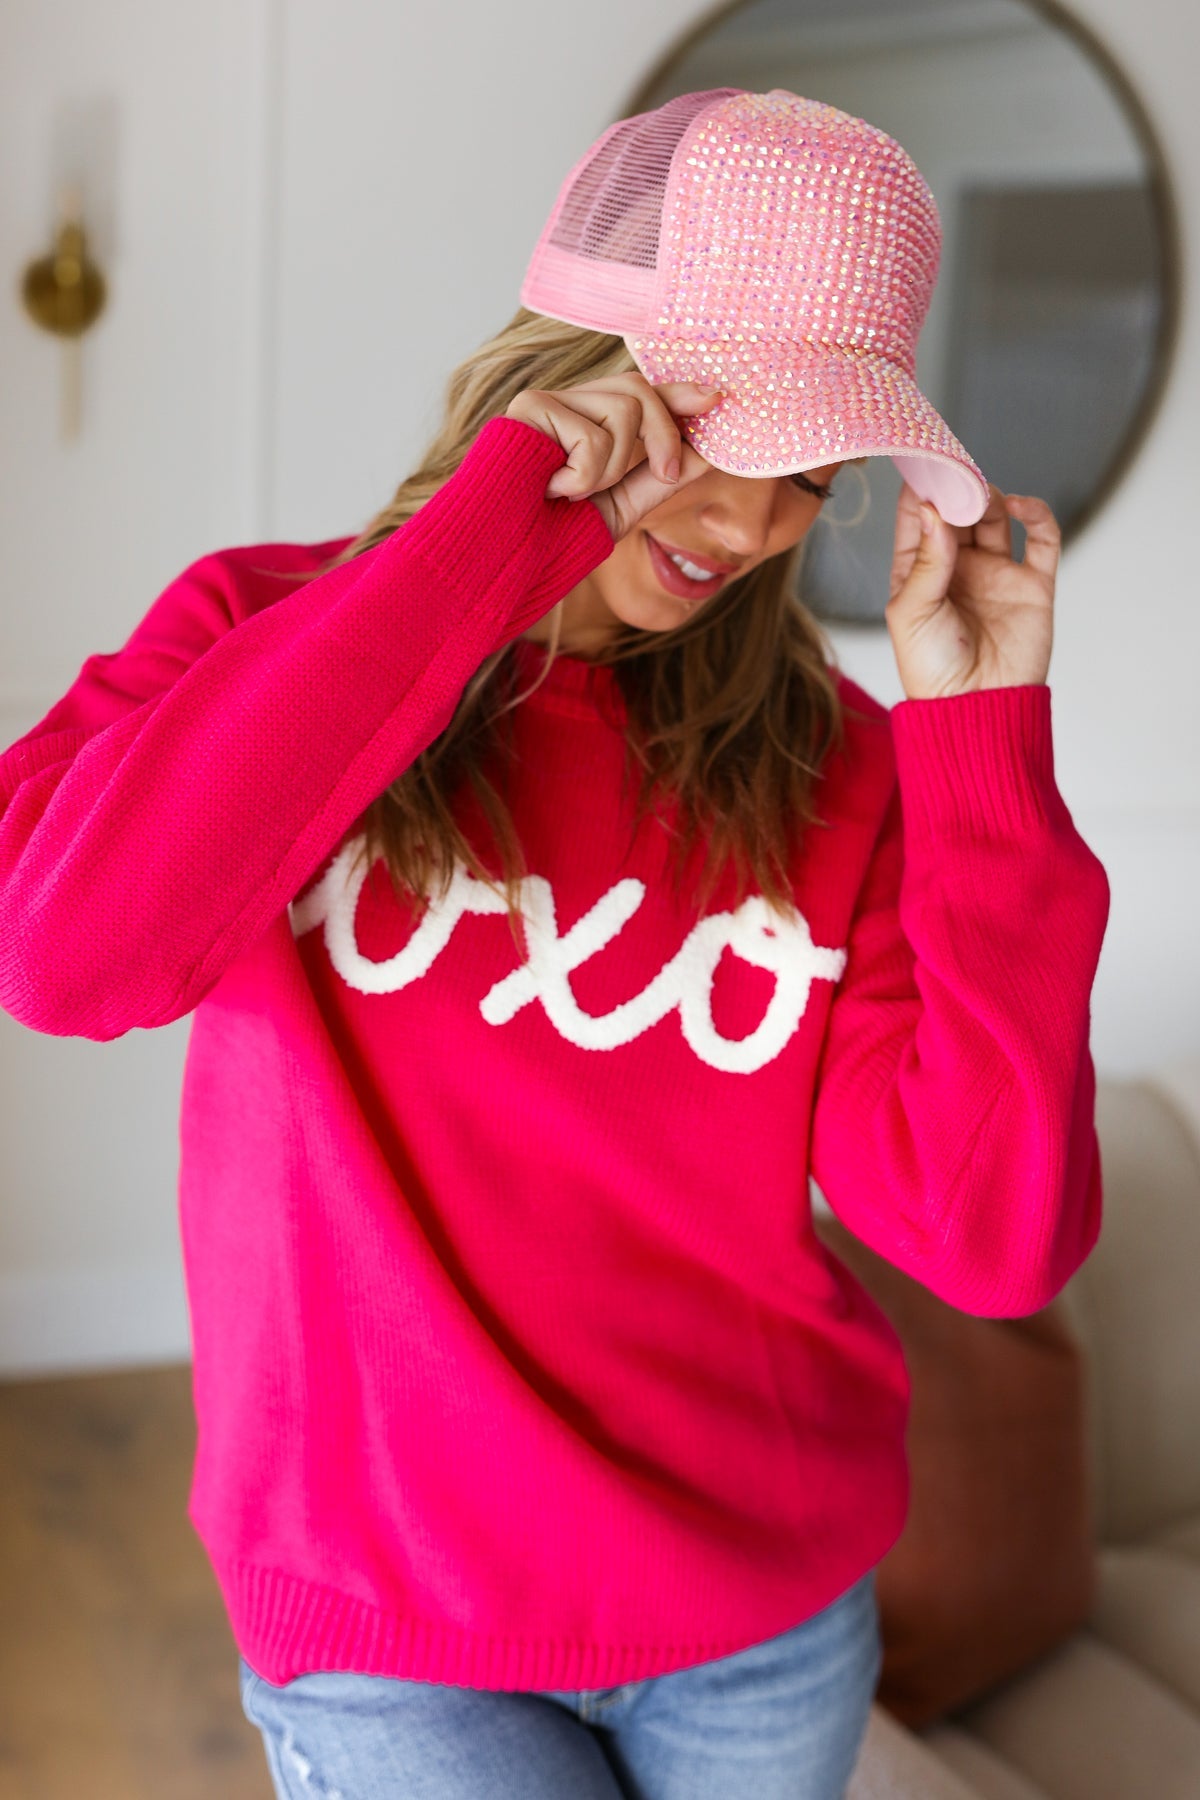 Love In the Air Fuchsia "Xoxo" Embroidered Sweater Haptics